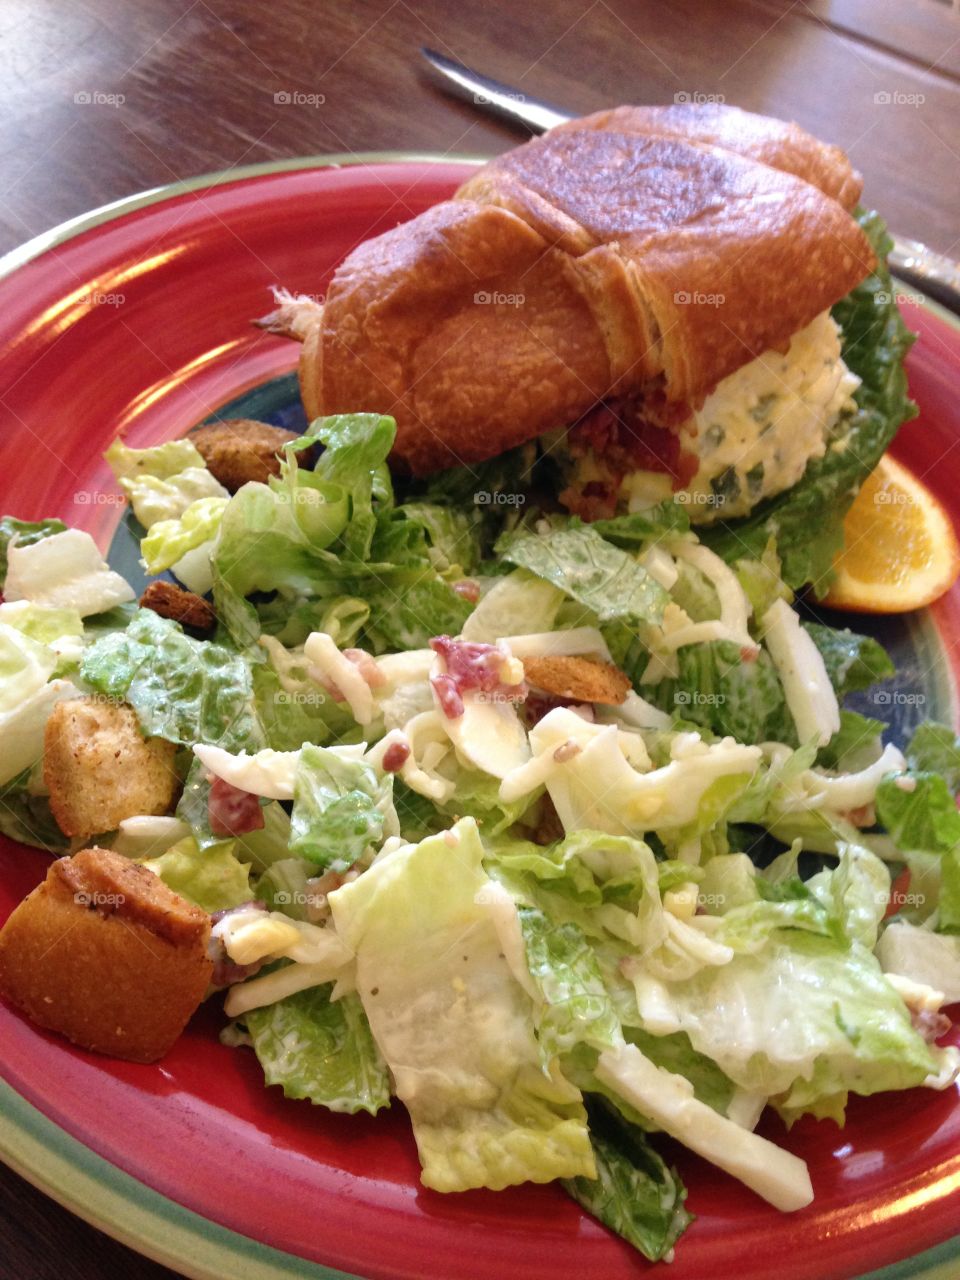 Egg salad croissant and salad